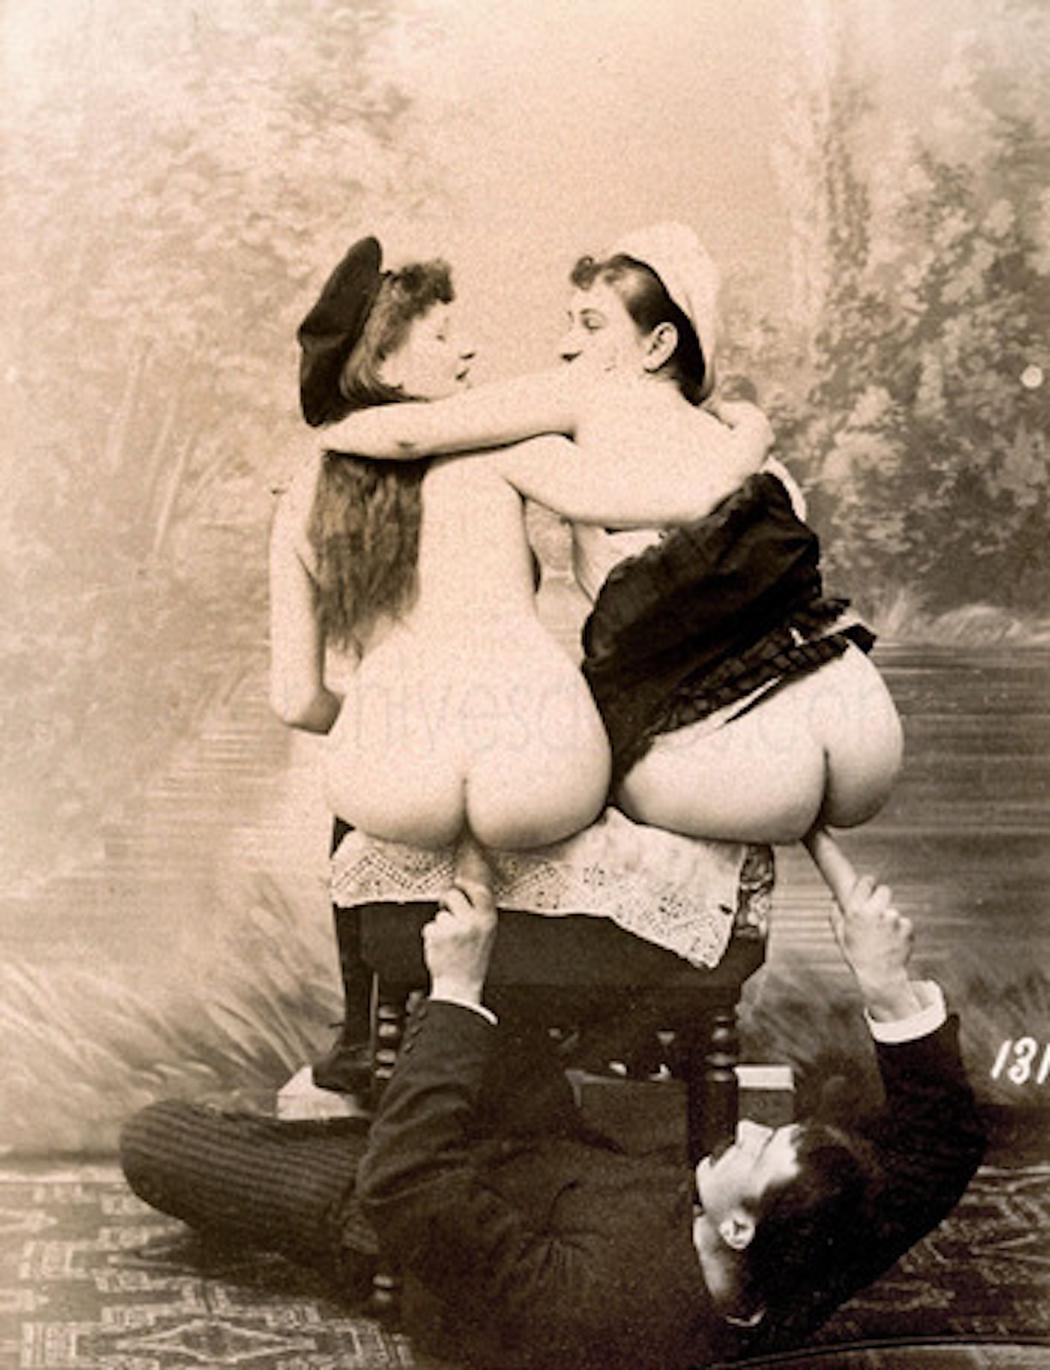 Erotic victorian images